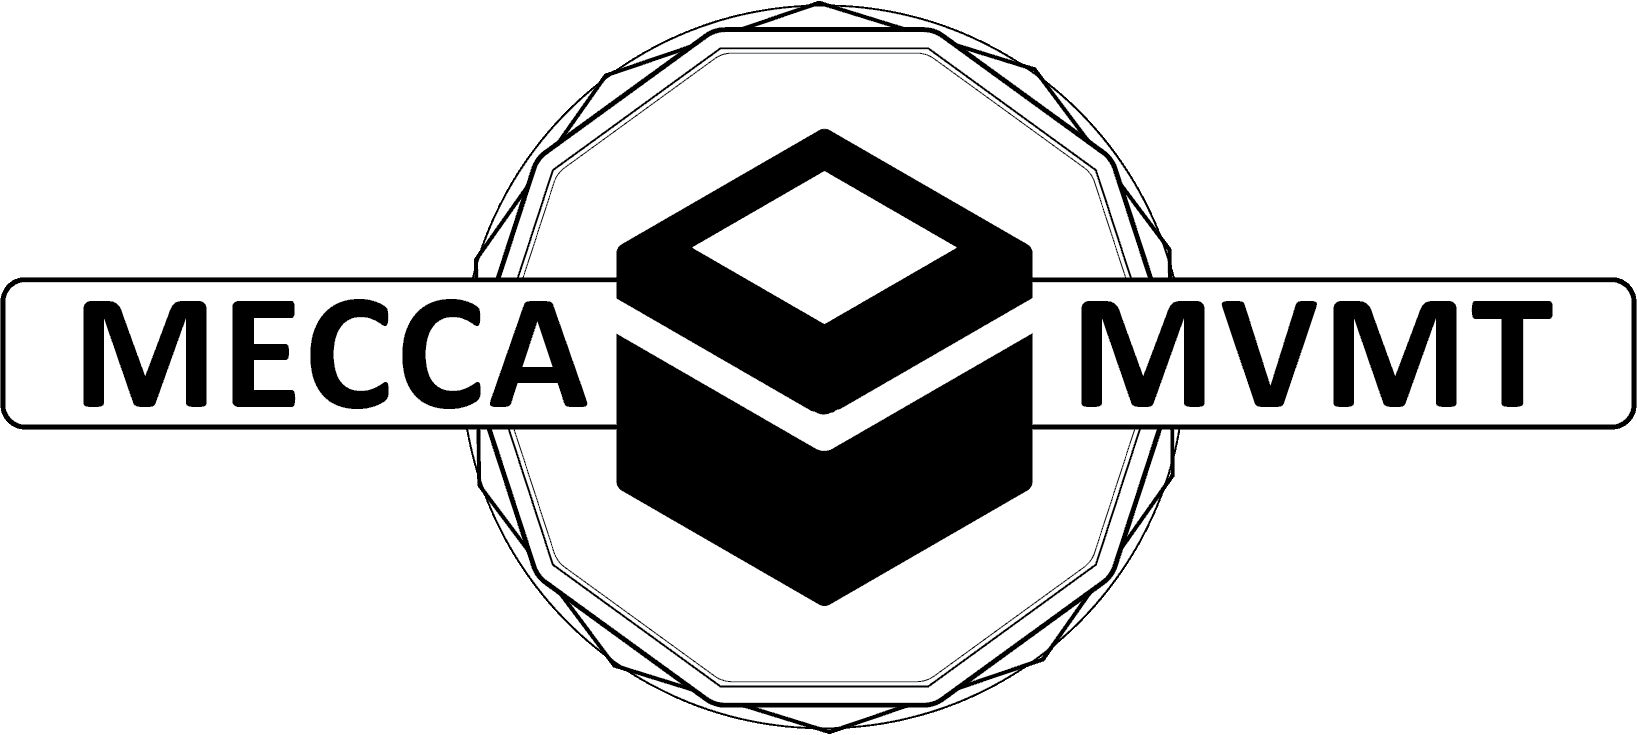 MVMT_Rect_White_Logo